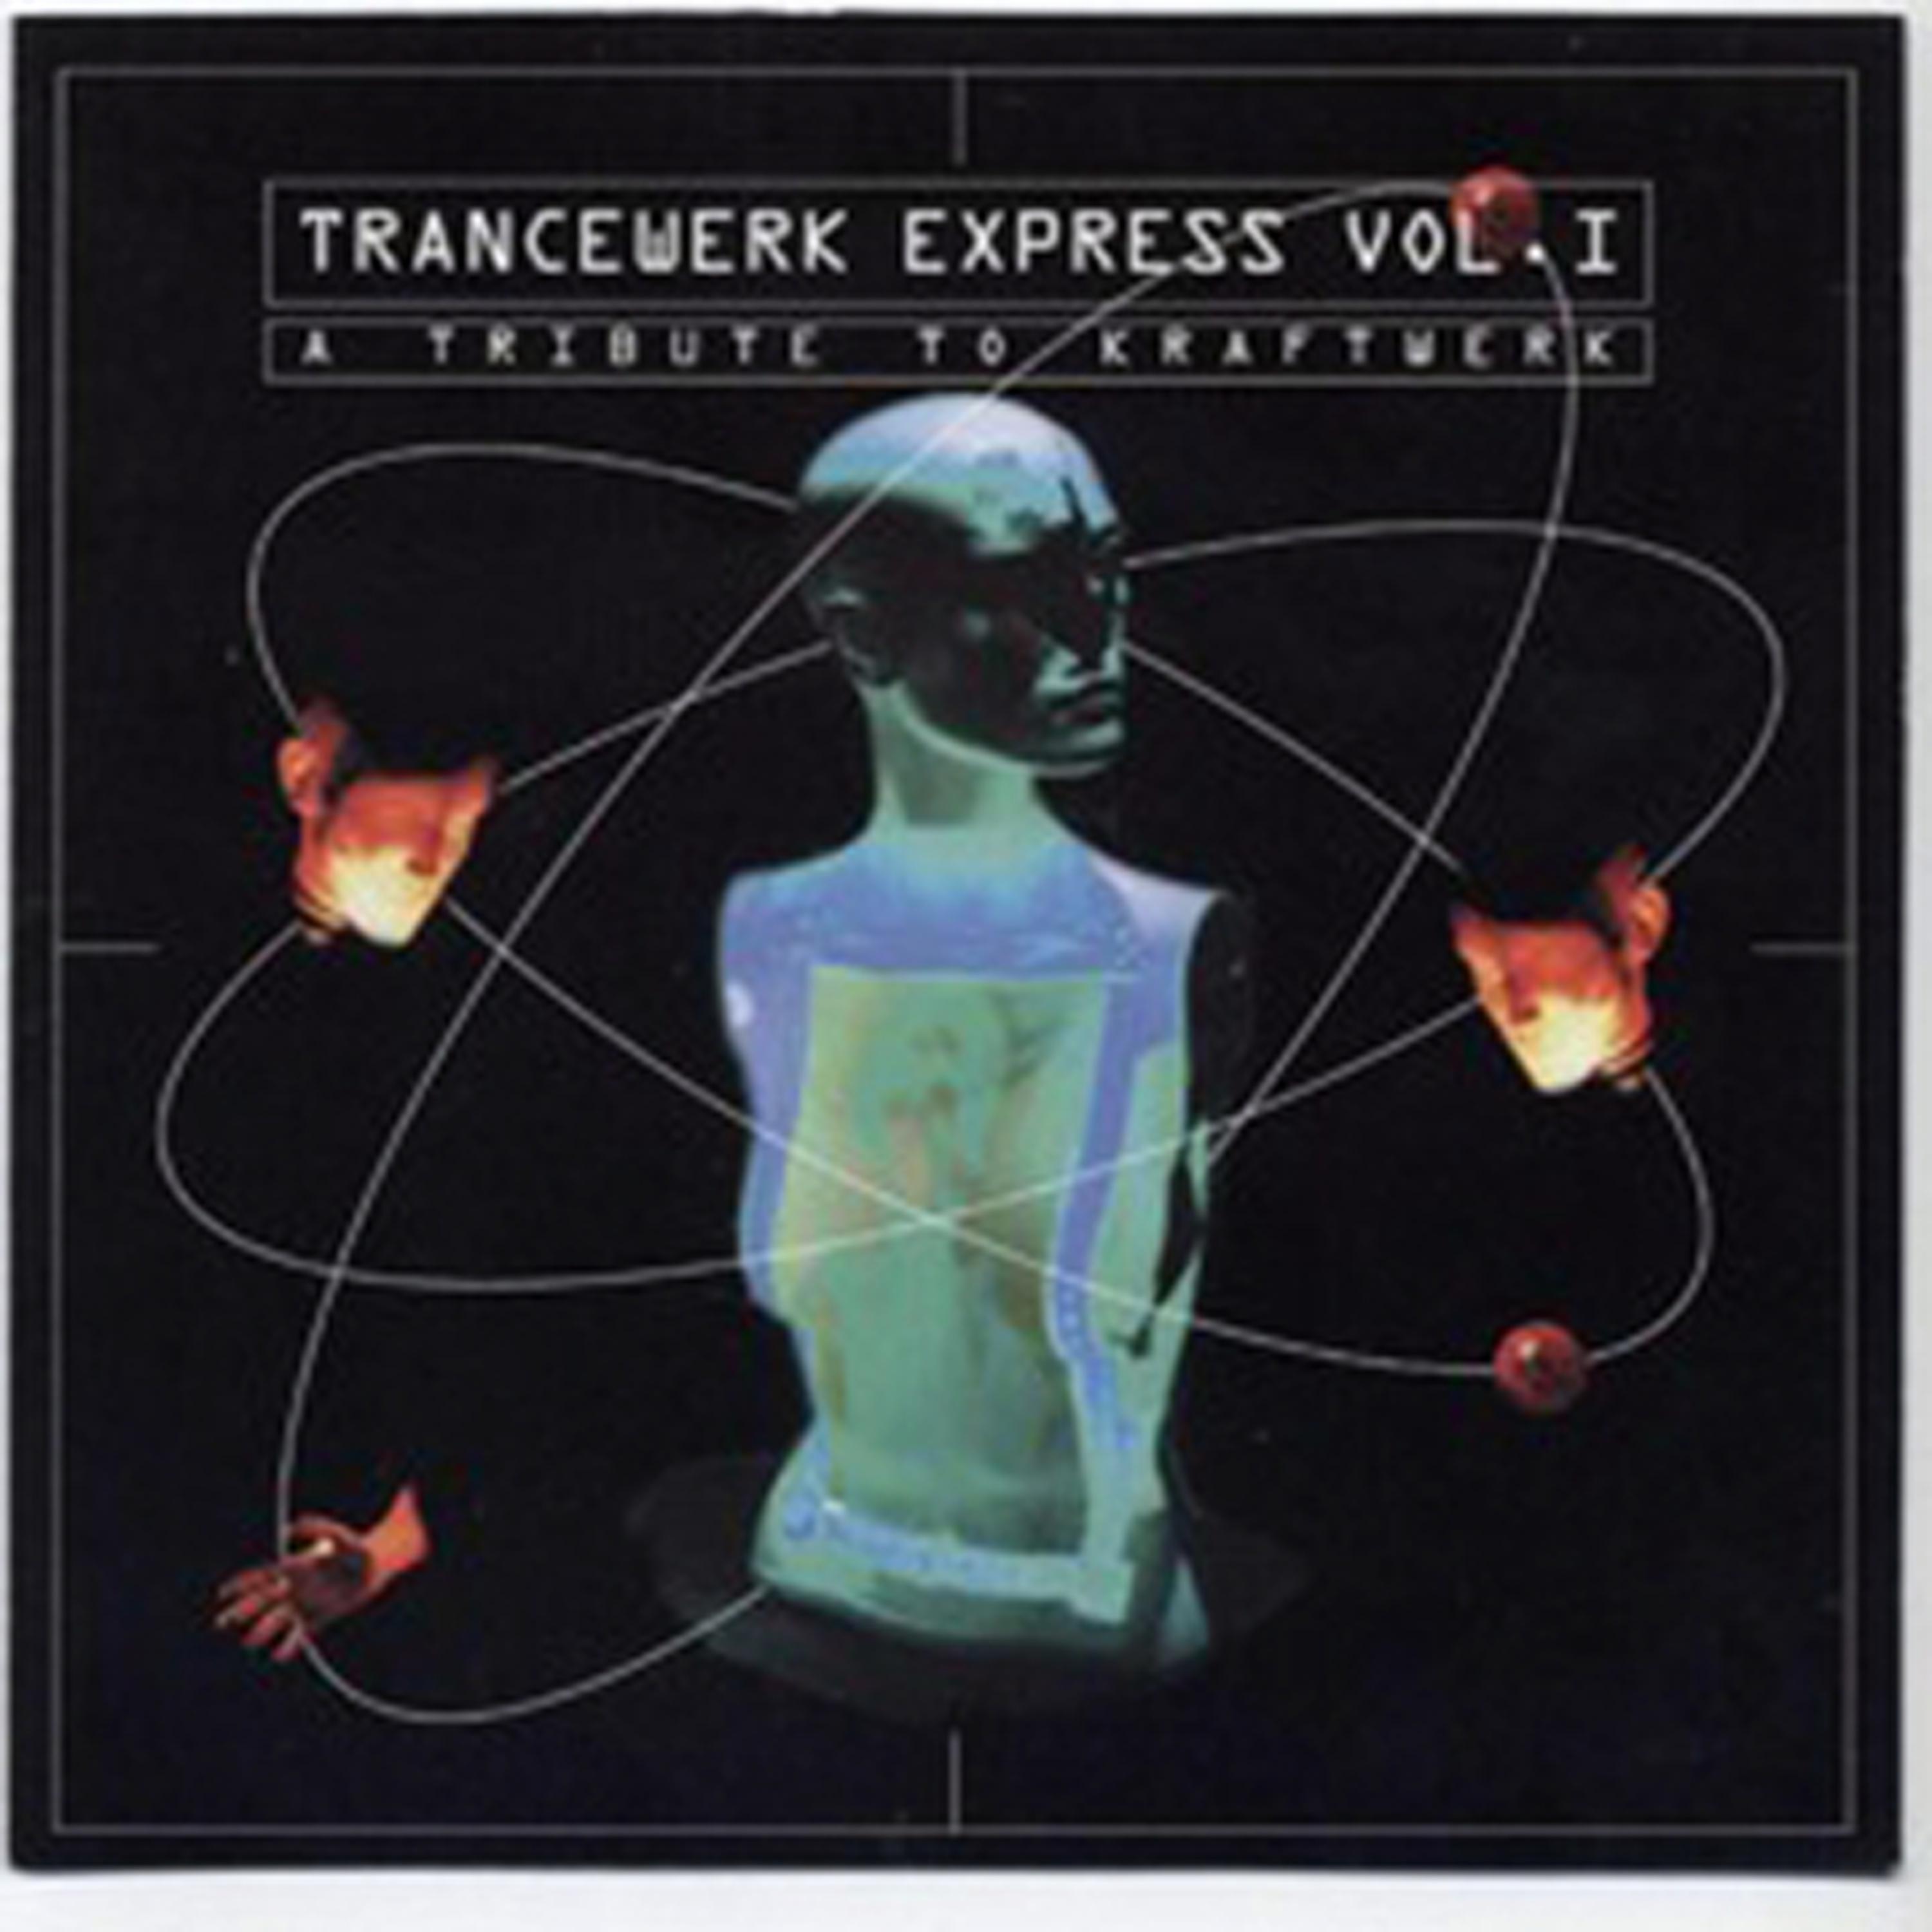 Постер альбома Trancewerk Express Vol. 1 a Tribute to Kraftwerk